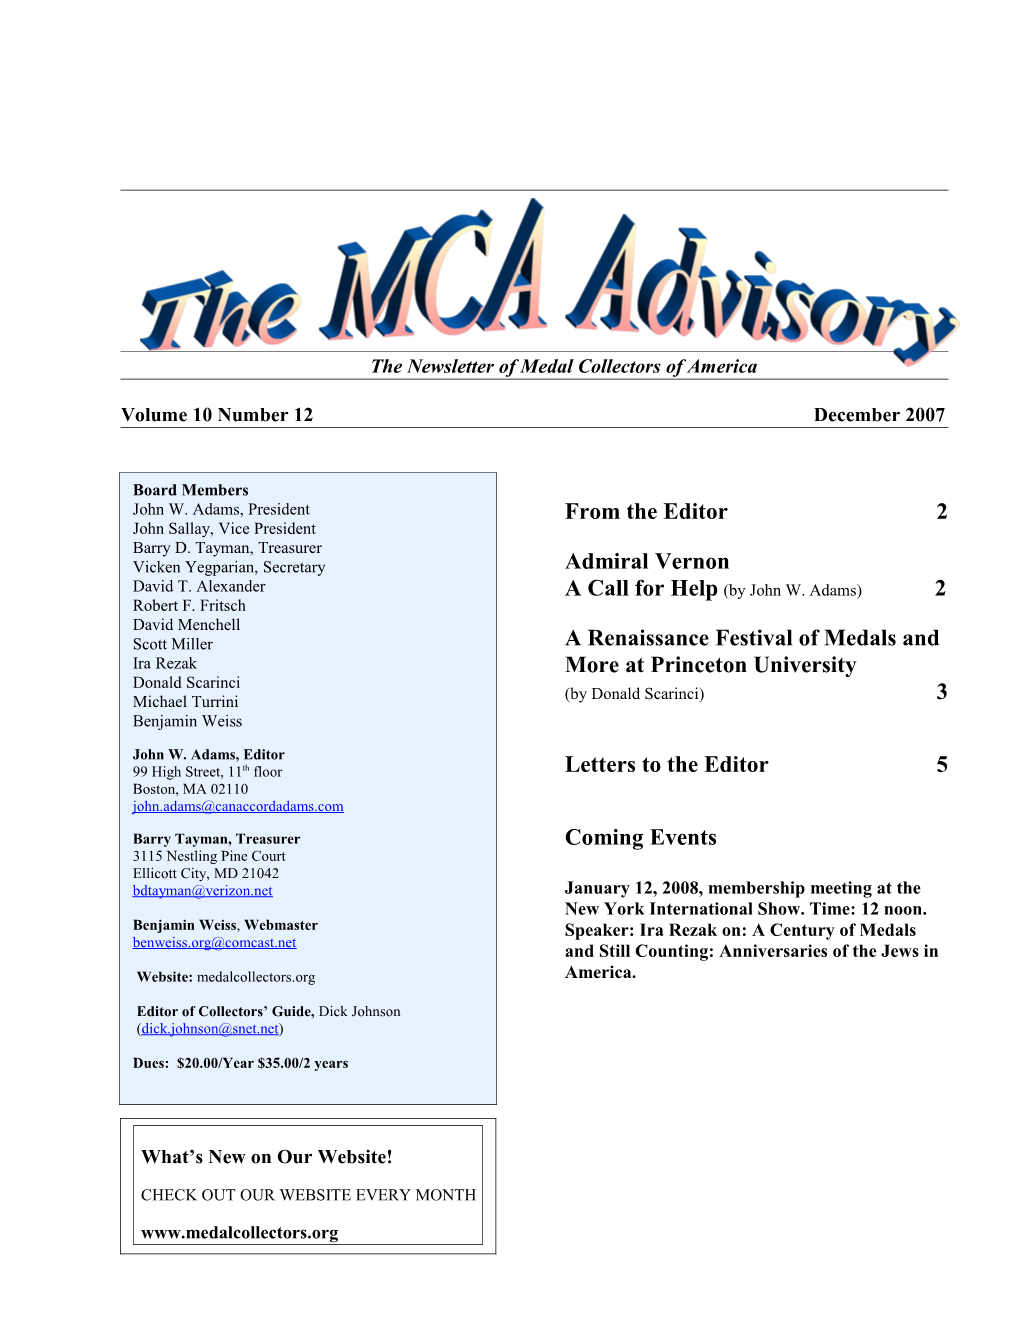 The MCA Advisory